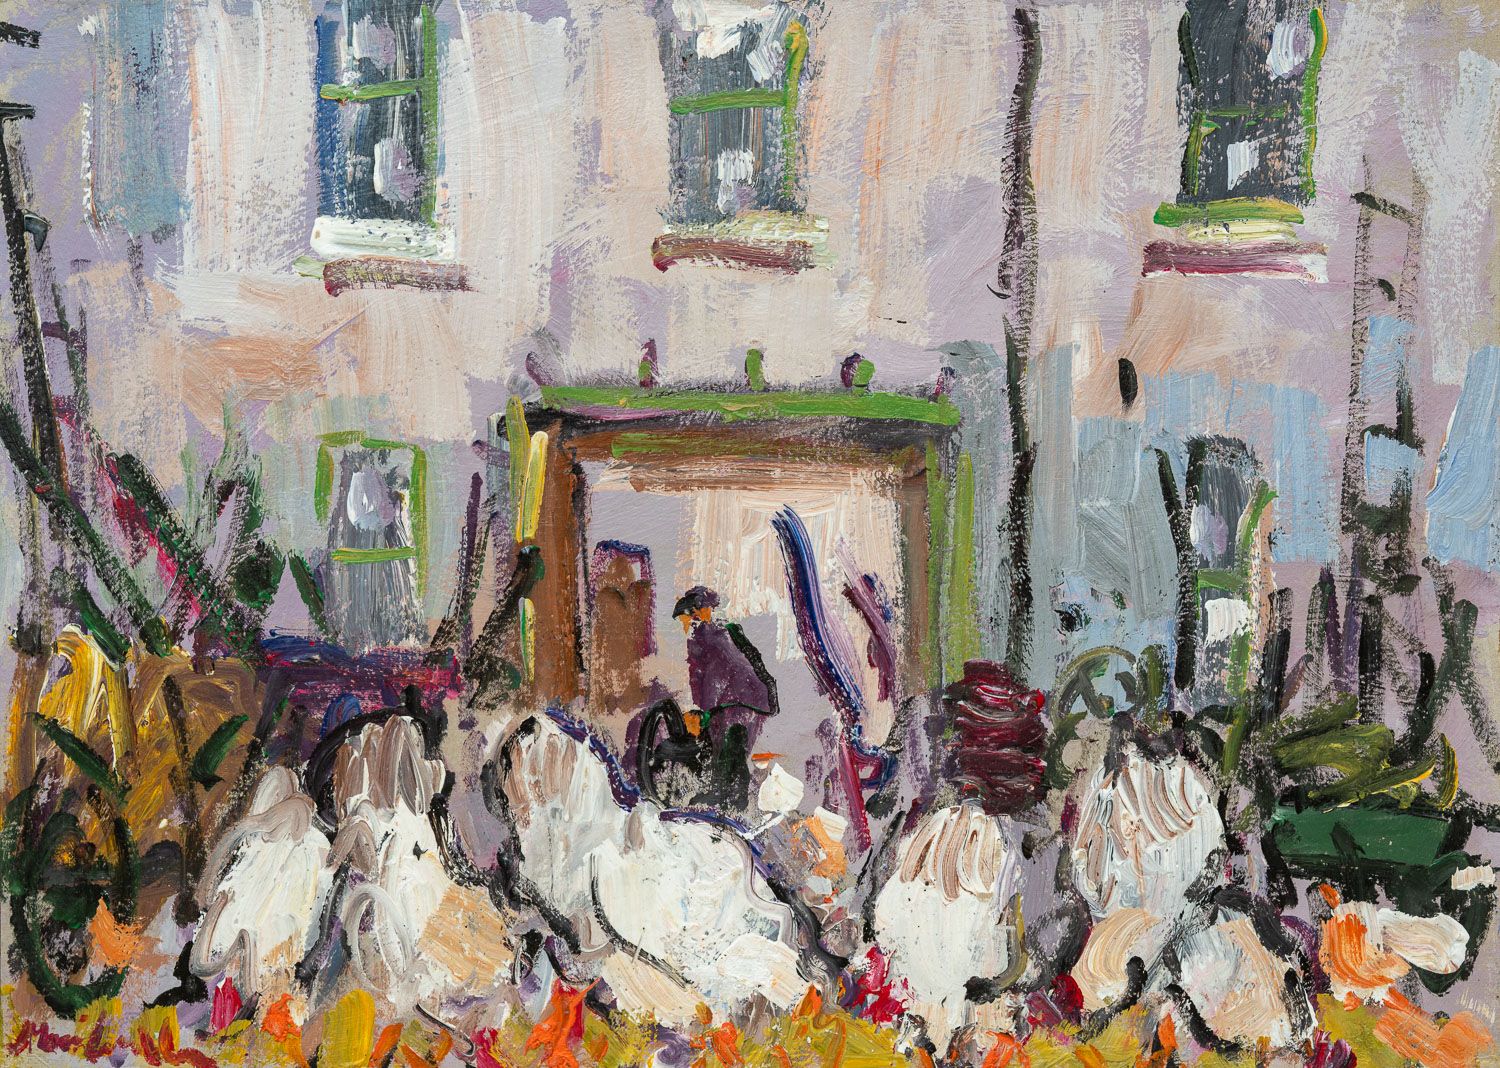 Feeding the Hens by Marie Carroll